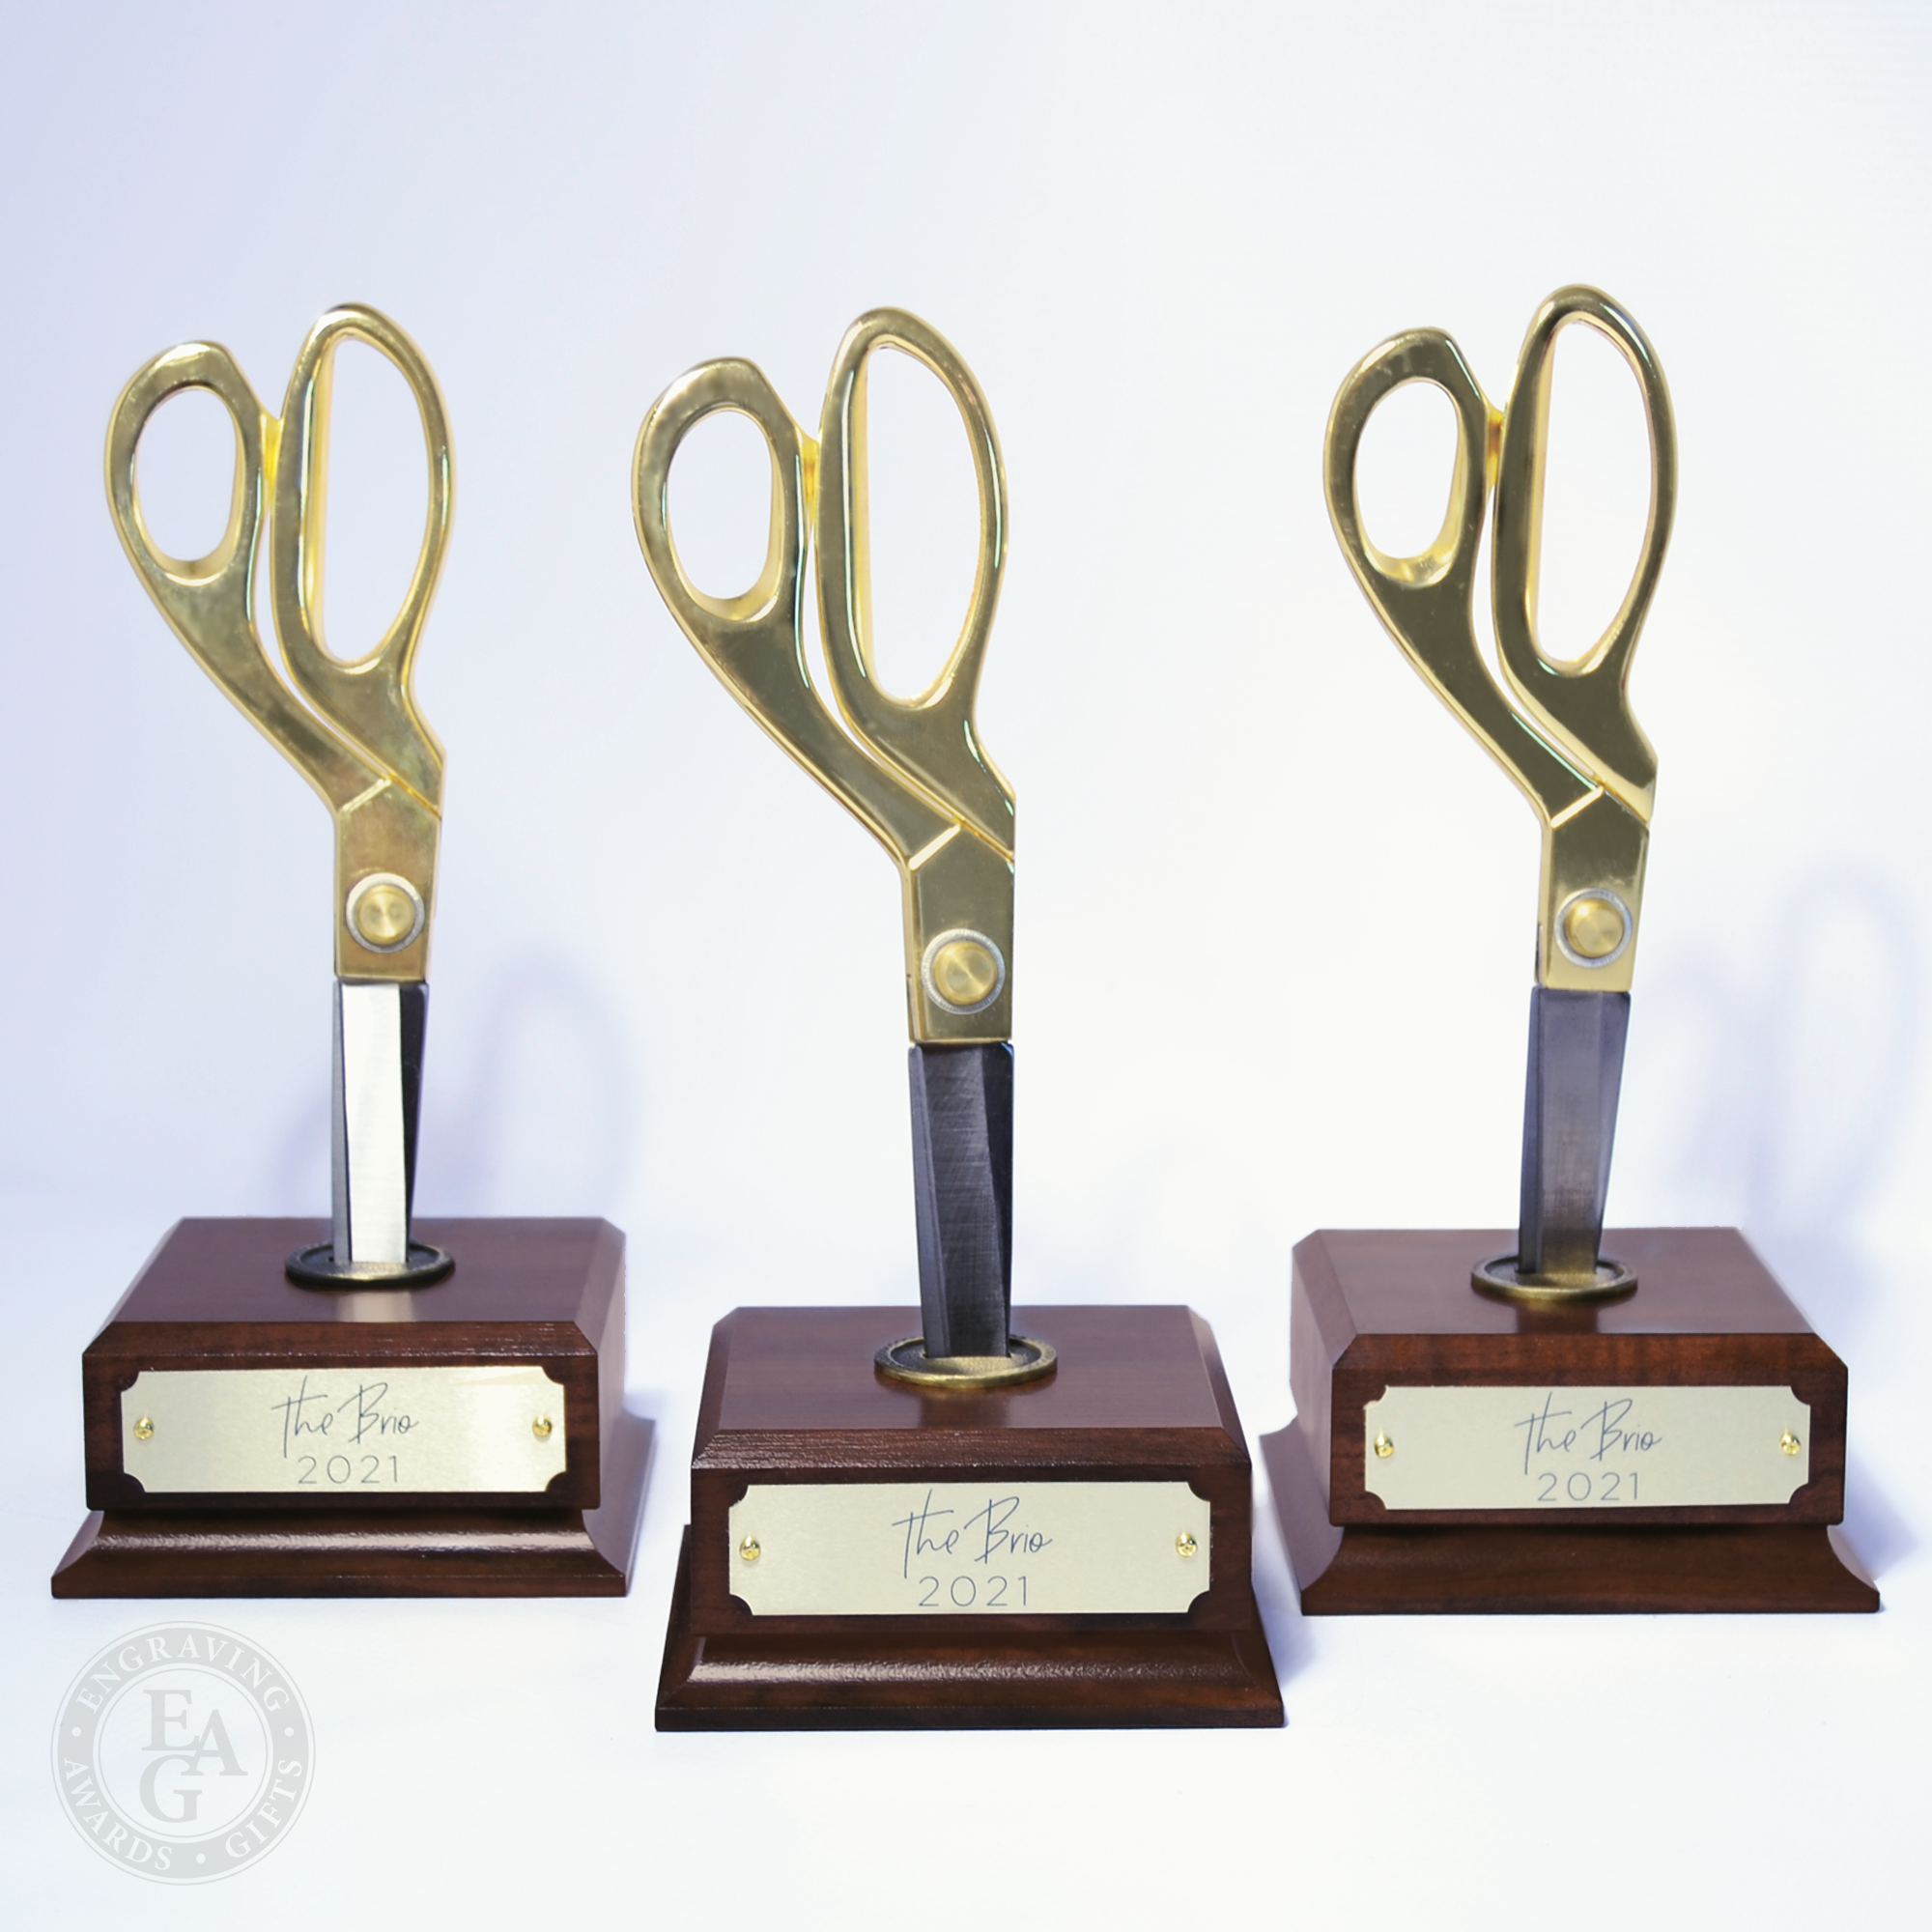 Engraving, Awards & Gifts Scissors Lapel Pins, Silver Finish Lapel Pin